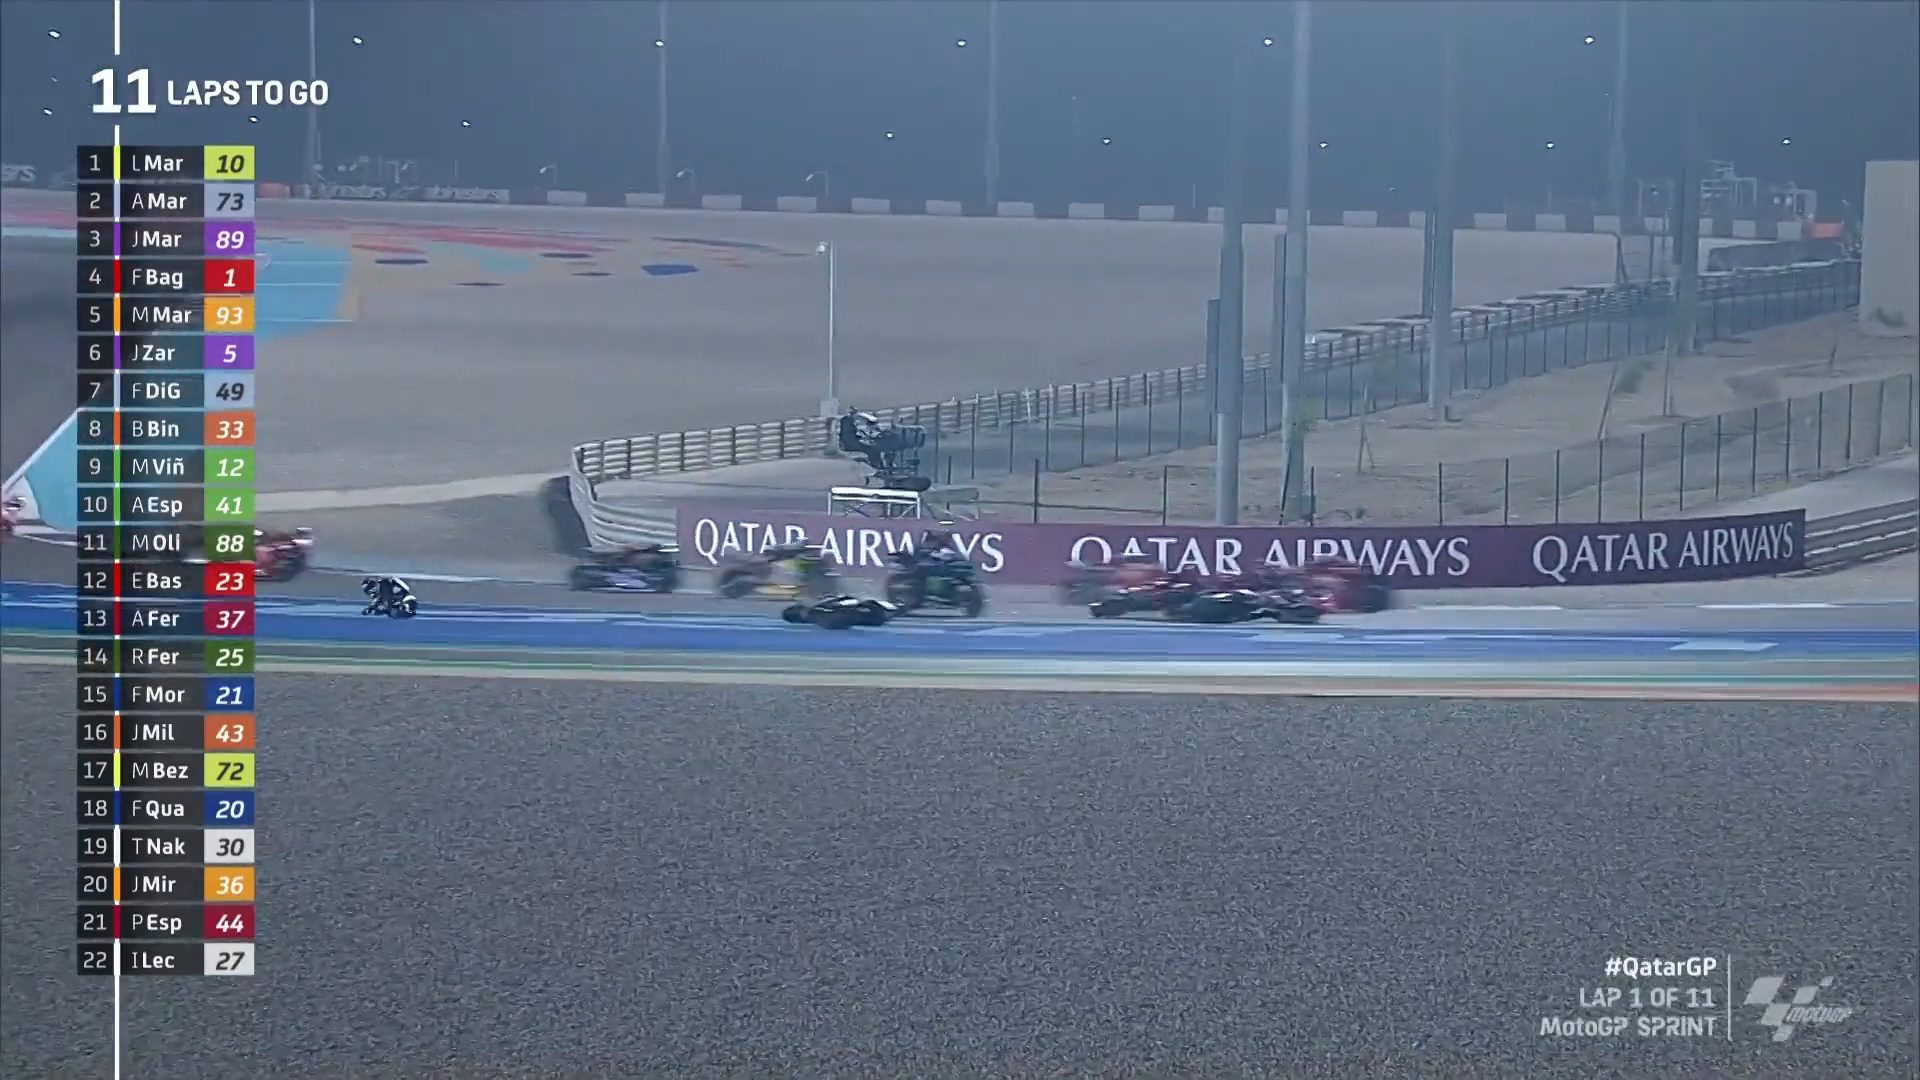 Miguel Oliveira fratura omoplata em queda no MotoGP do Qatar - SIC